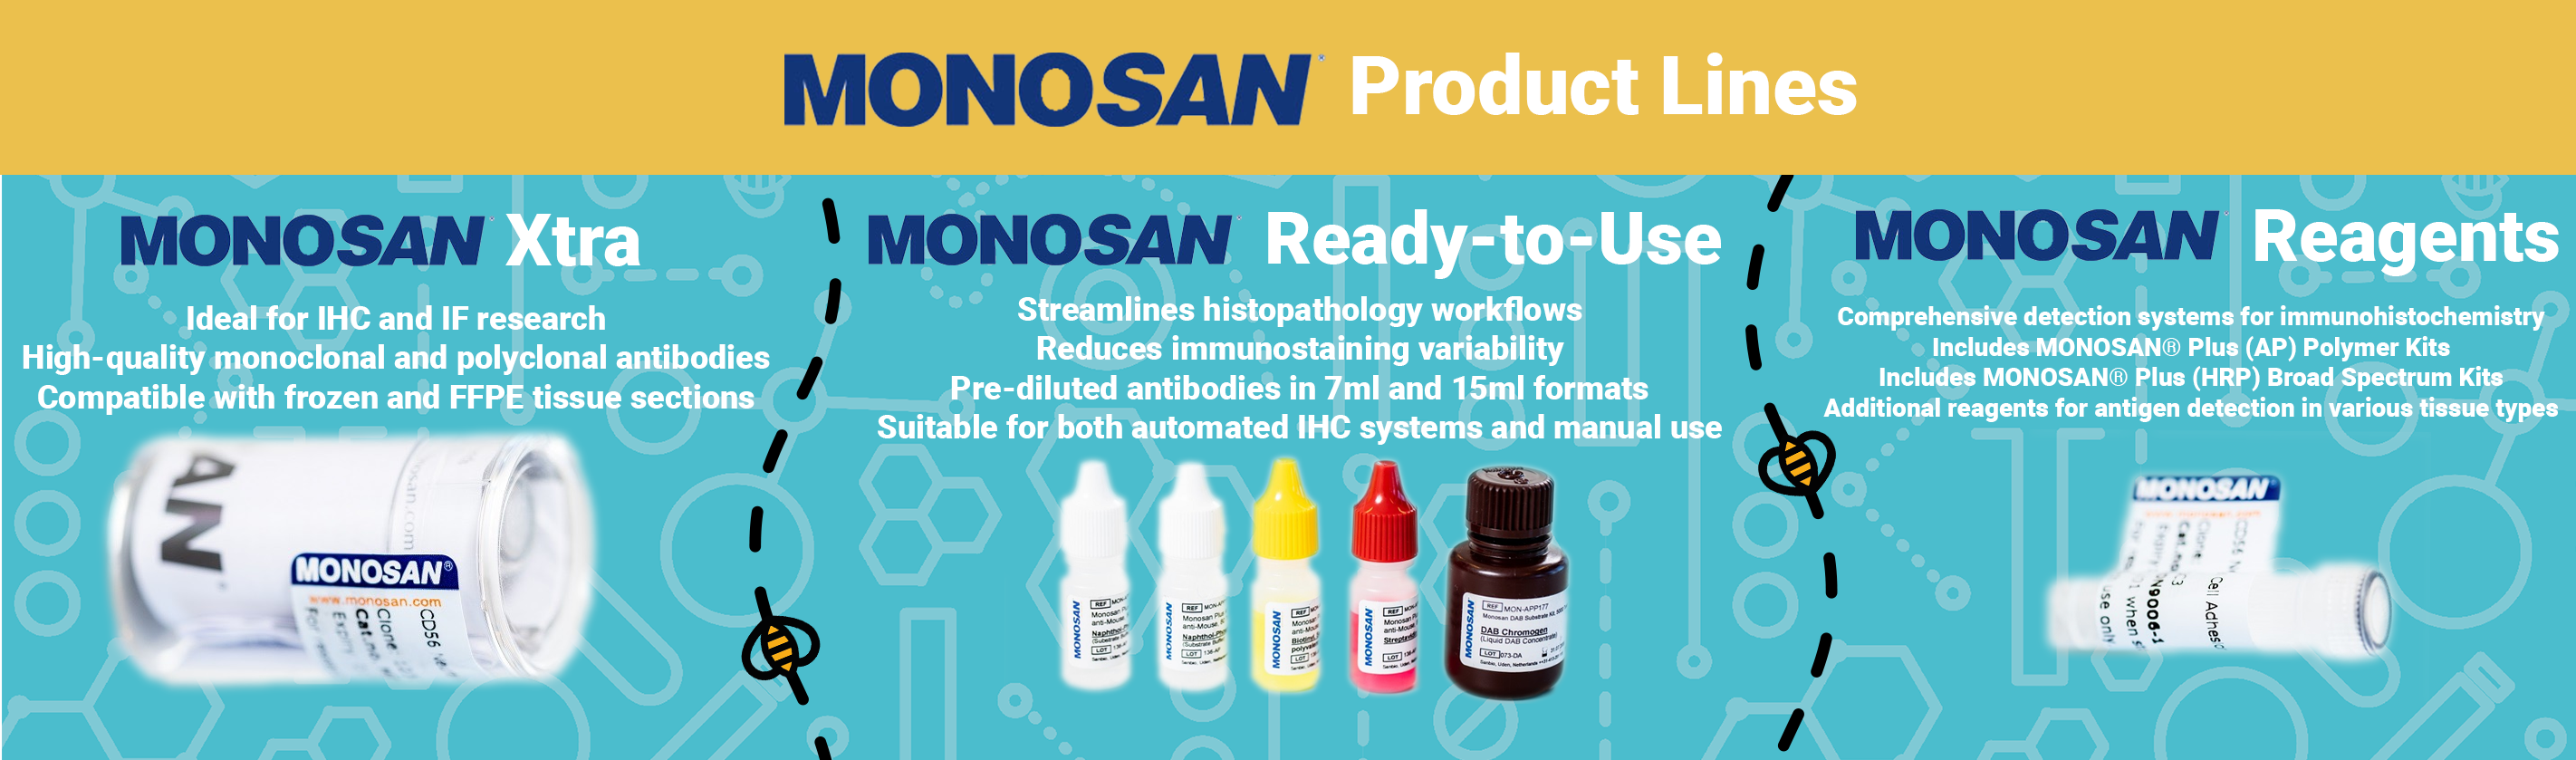 Monosan-Products